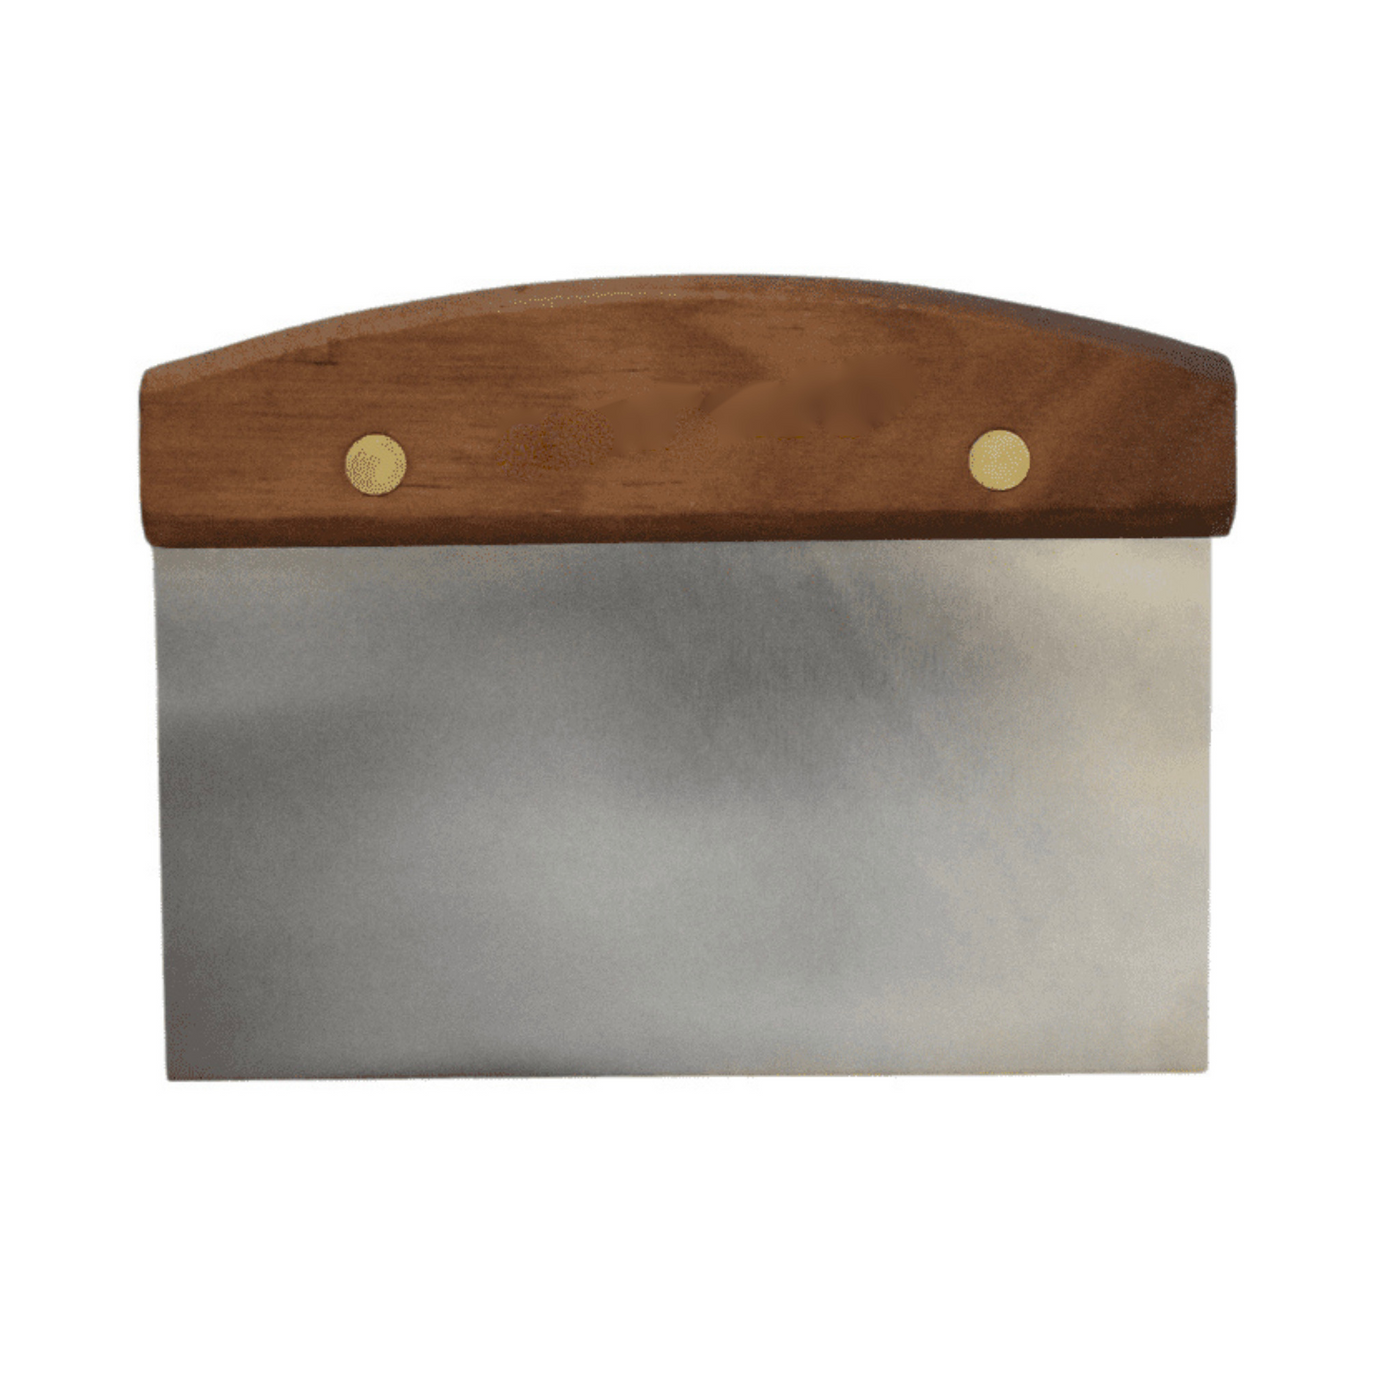 Bench Knife by Lamson- Walnut Handle